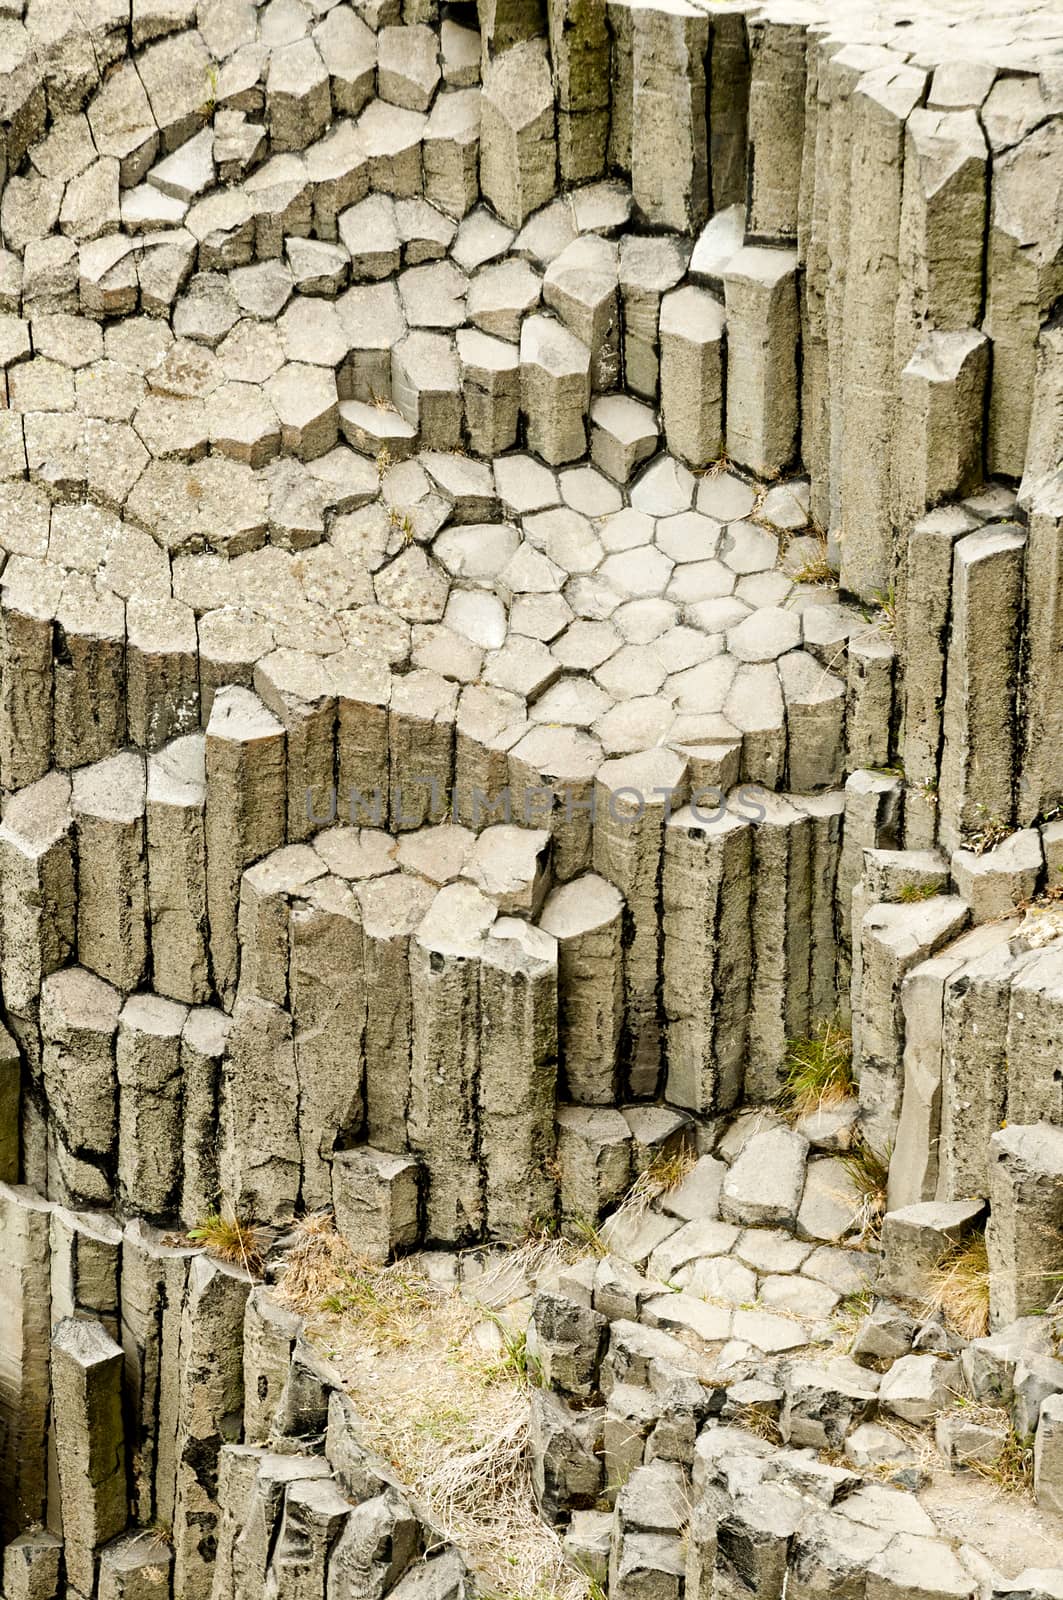 Columnar jointed basalt. mafic extrusive igneous rock. Panska Skala, Kamenicky Senov Czech Republic by vladiczech